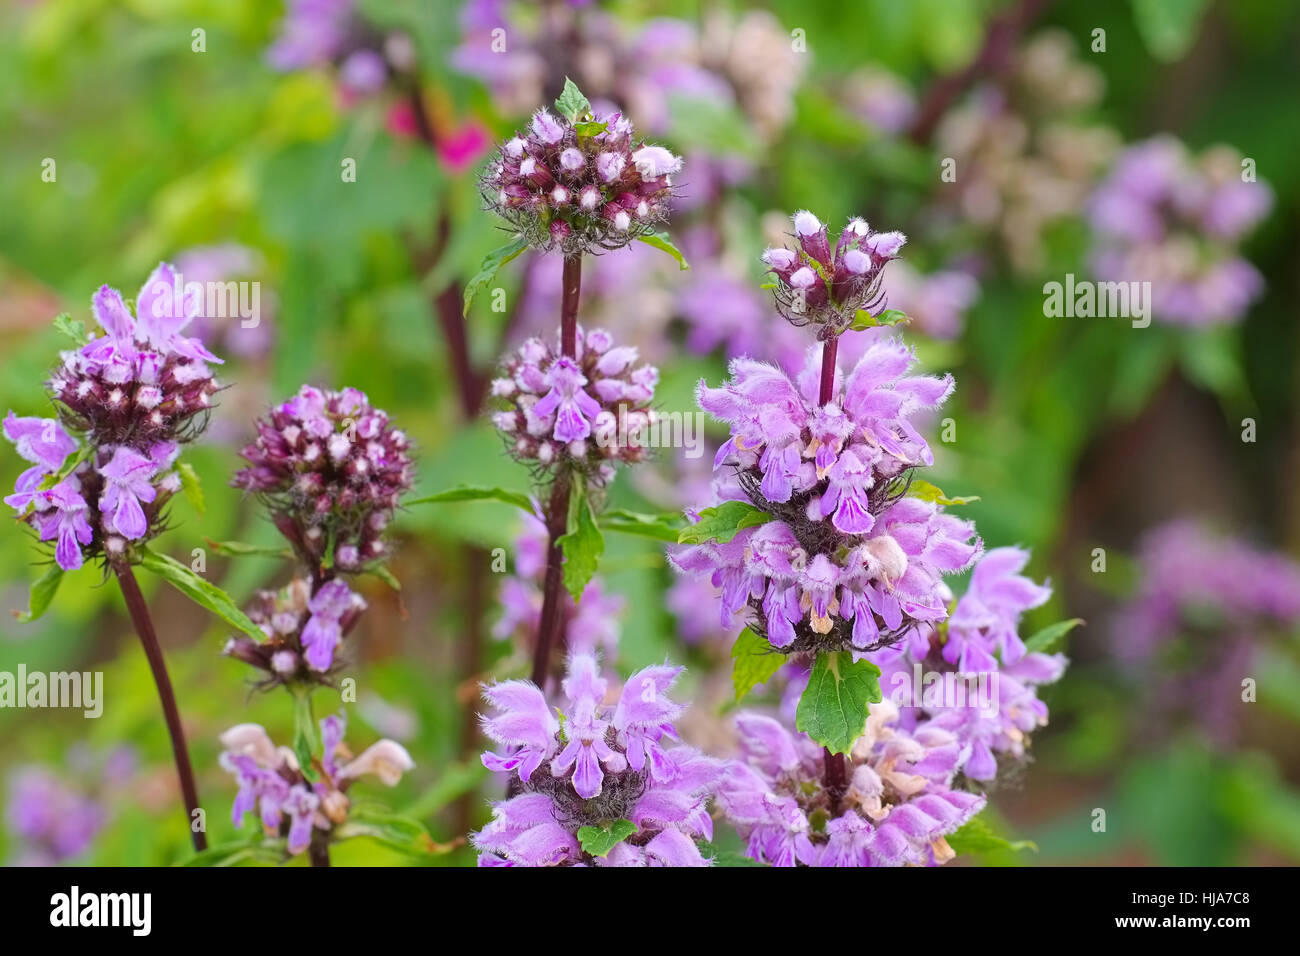 Phlomis maximowiczii a purple wildflower Stock Photo